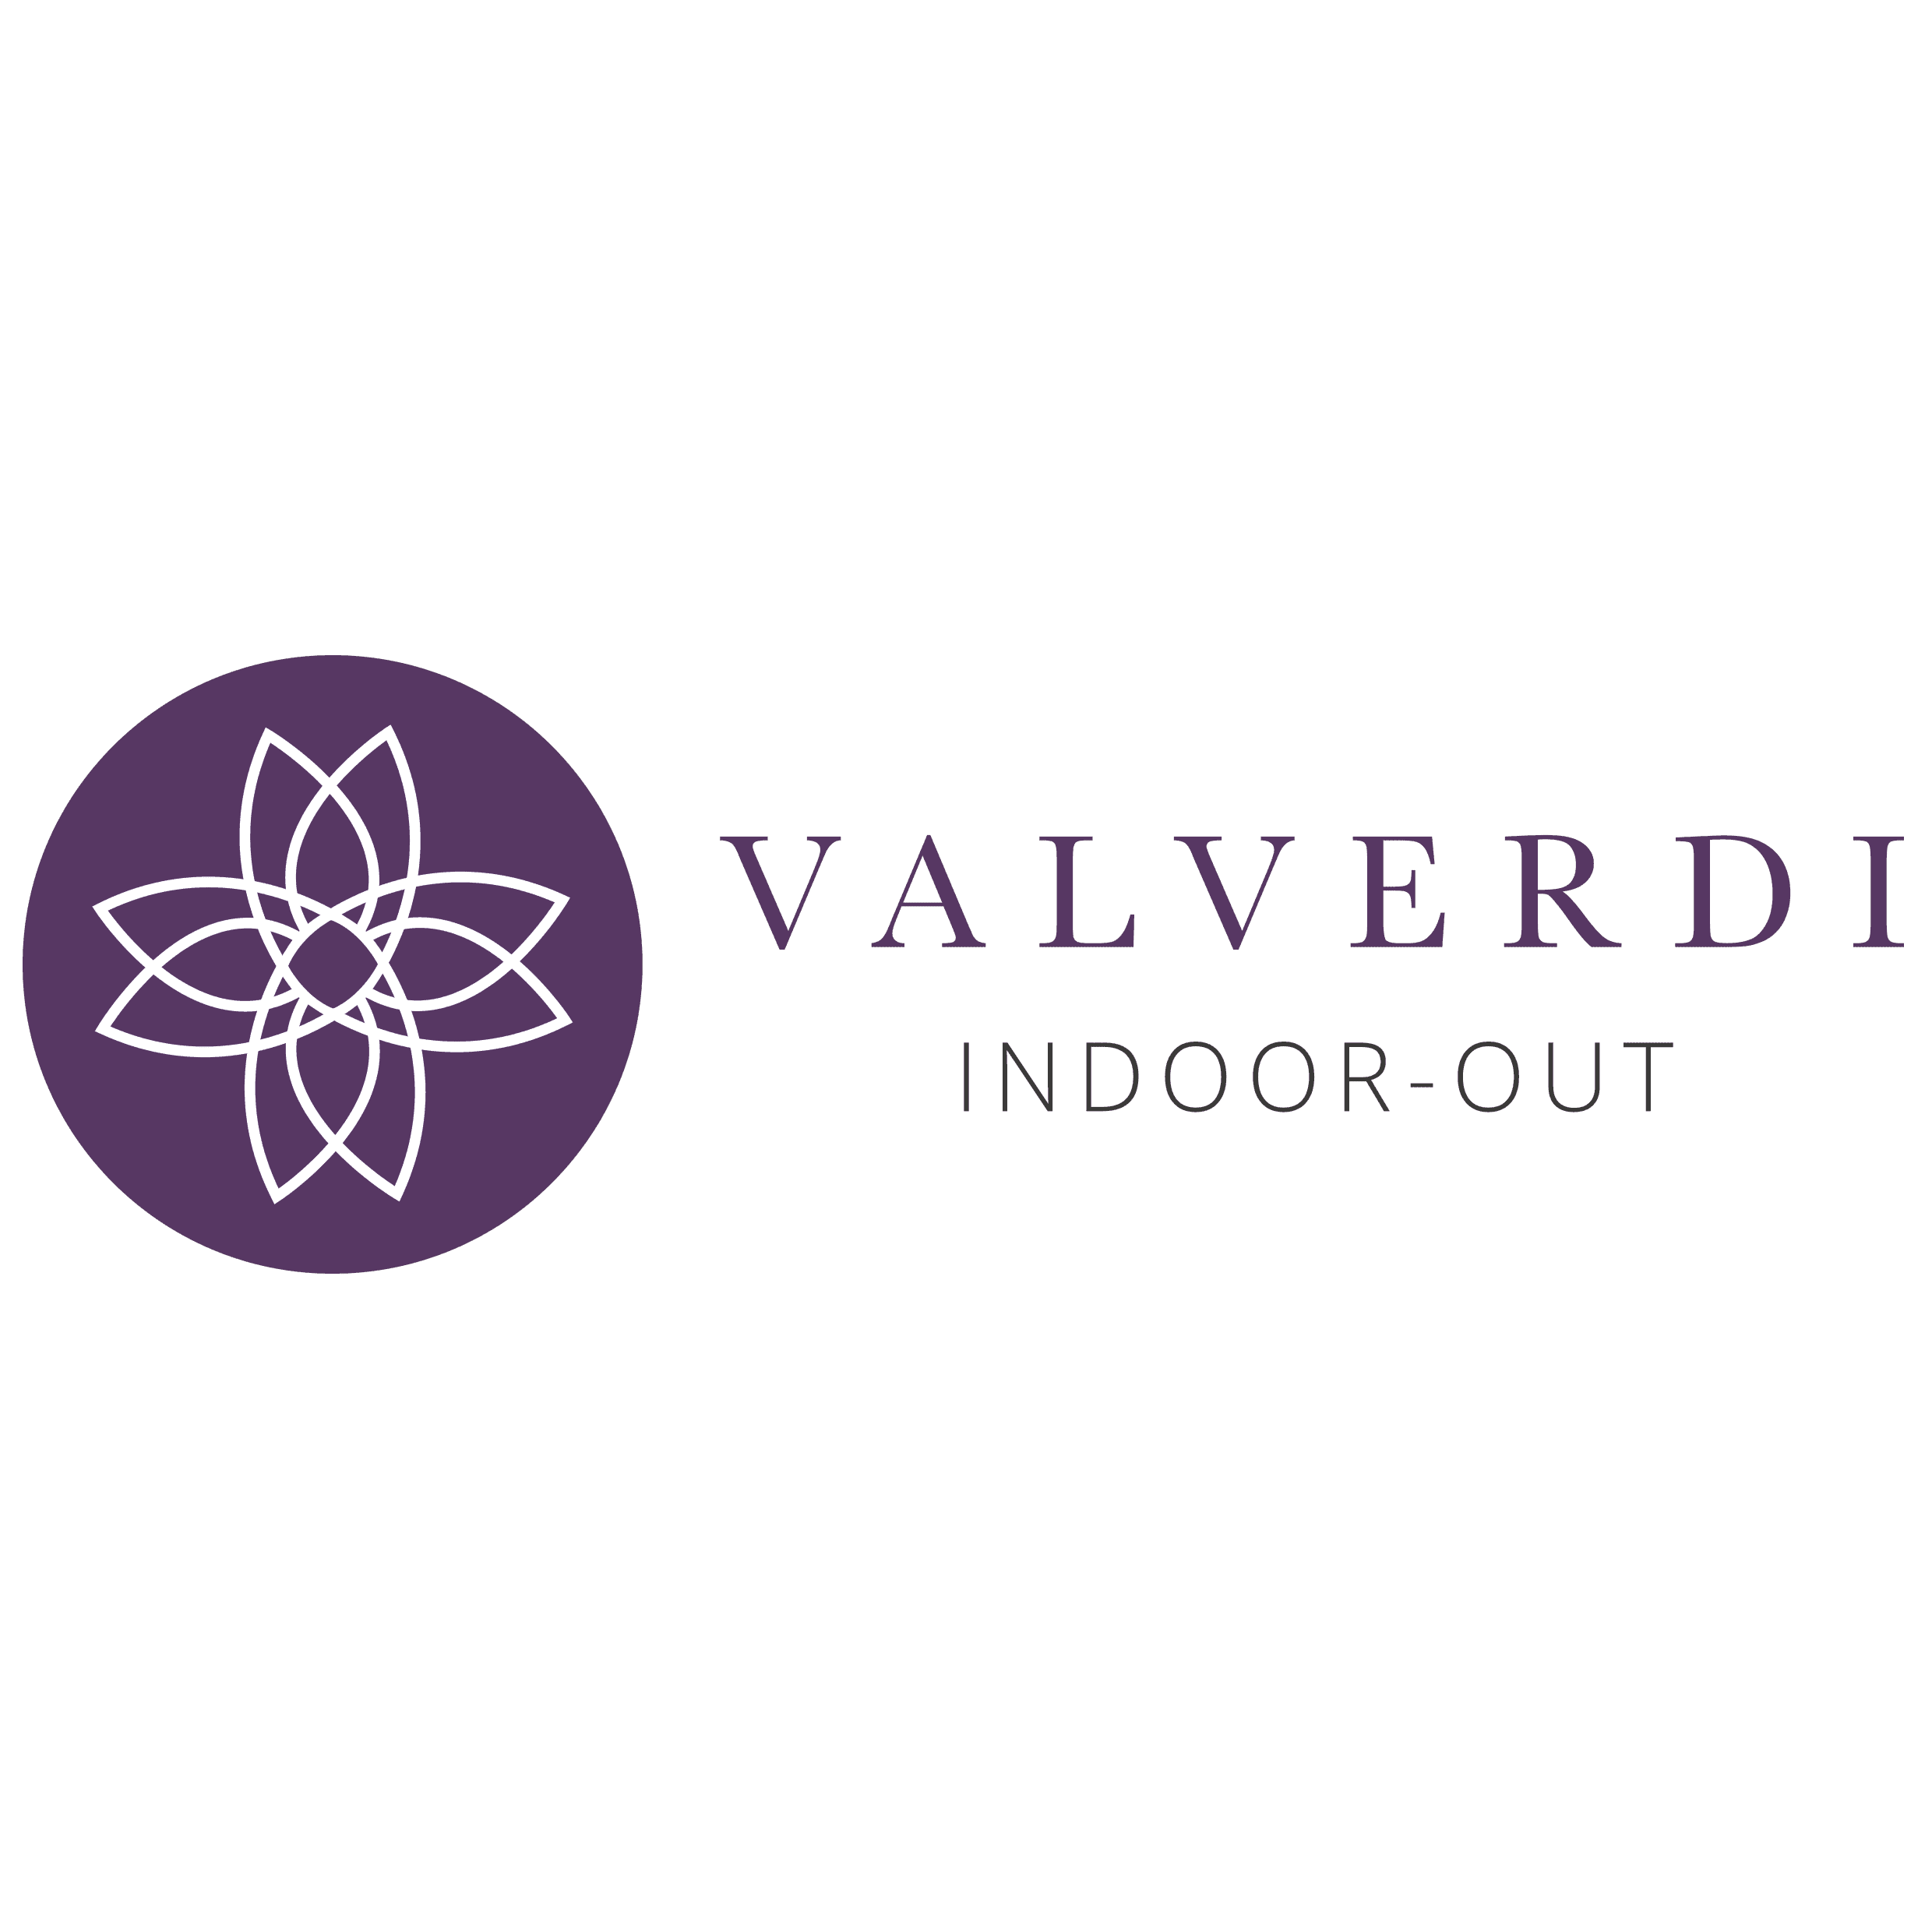 goodhomes july2019 Valverdi Indoor Out logo 2